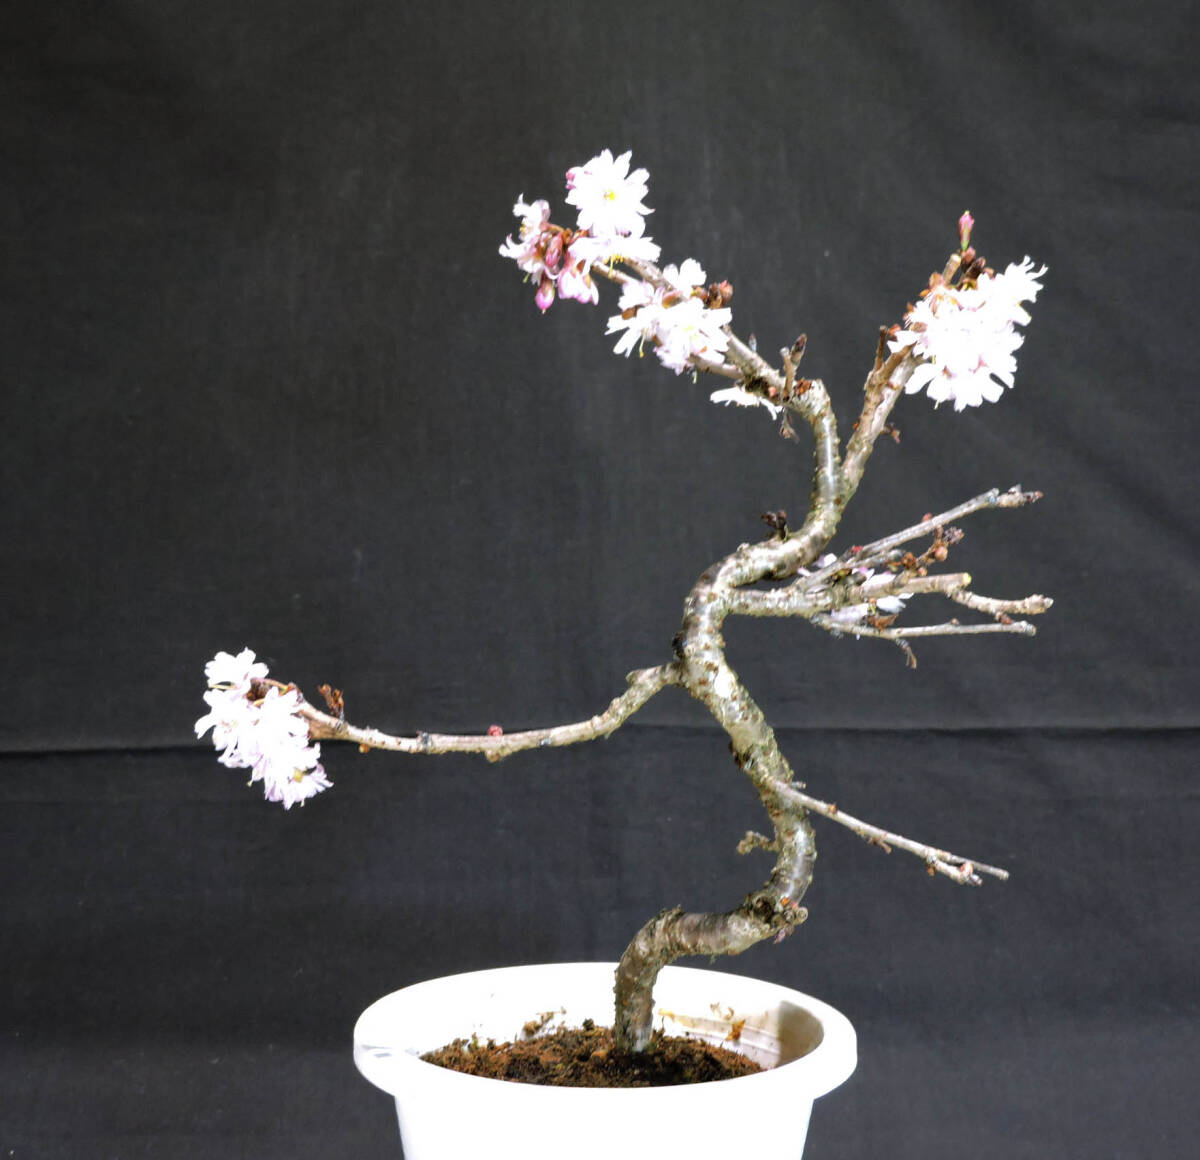  Sakura 10 month Sakura (juugatsu The kla/ Sakura ) bonsai plastic pot seedling depth 15cm width 19cm height 32cm